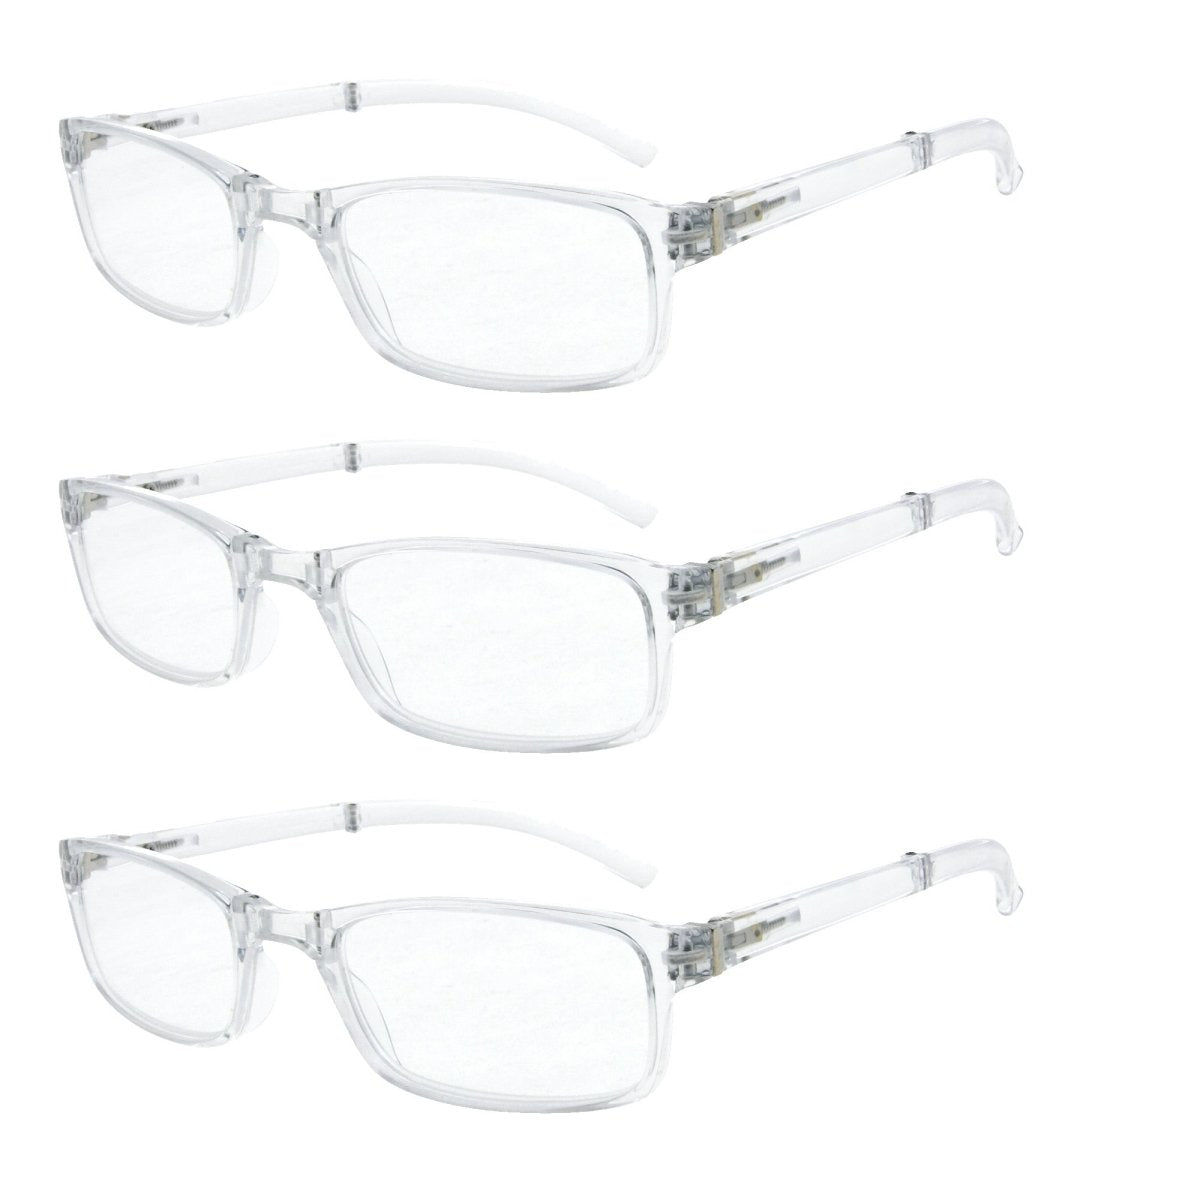 3 Pack Chic Reading Glasses Foldable Readers Women Men R123eyekeeper.com